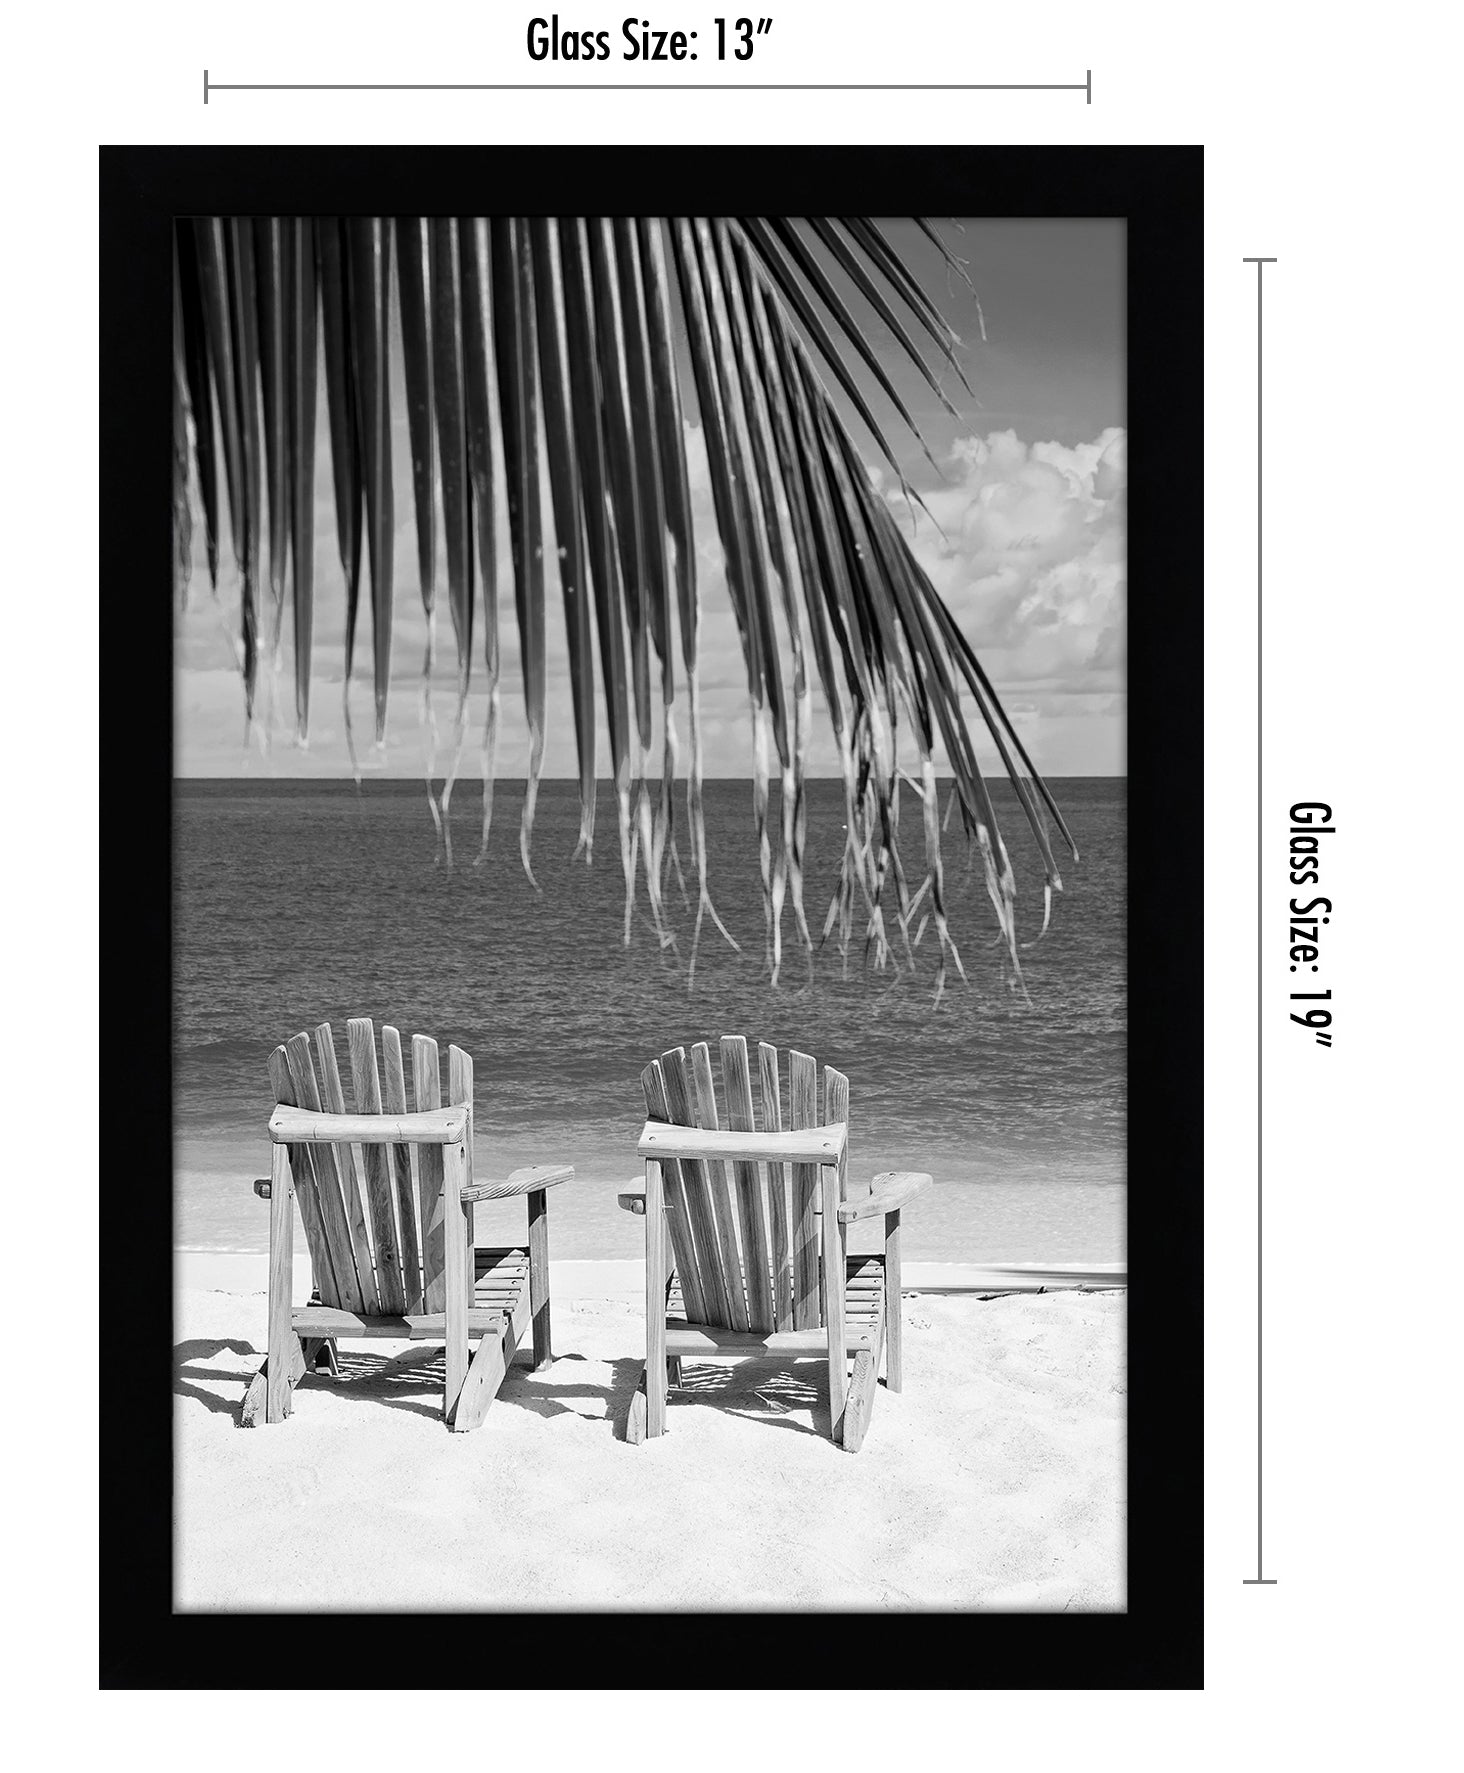 White Picture Frames & White Photo & Poster Frames